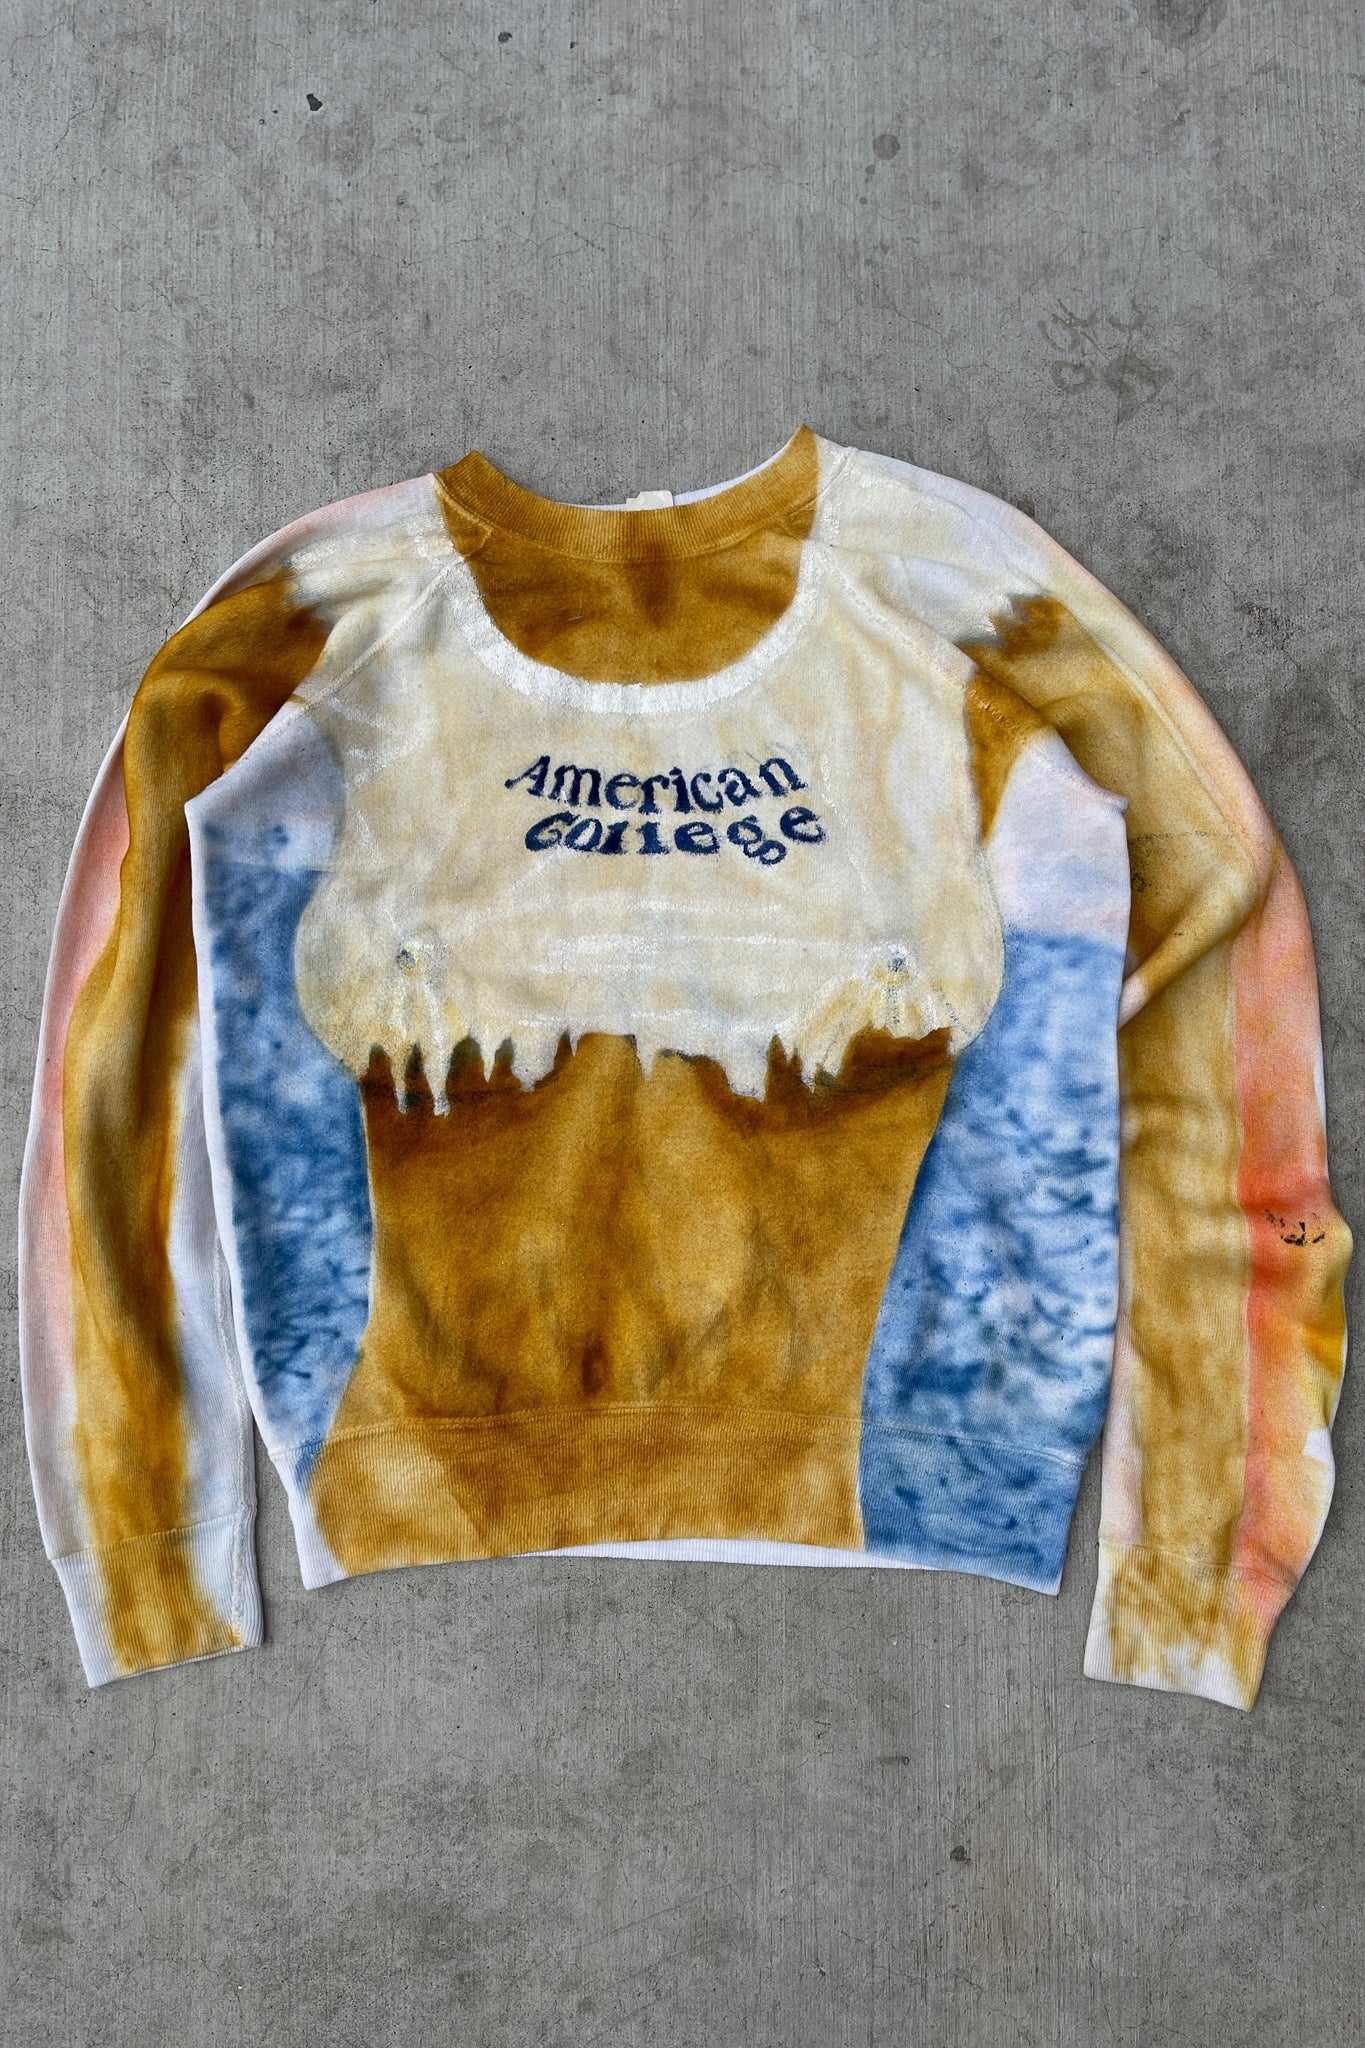 1970s ‘American College’ Hand Drawn Sweatshirt - M